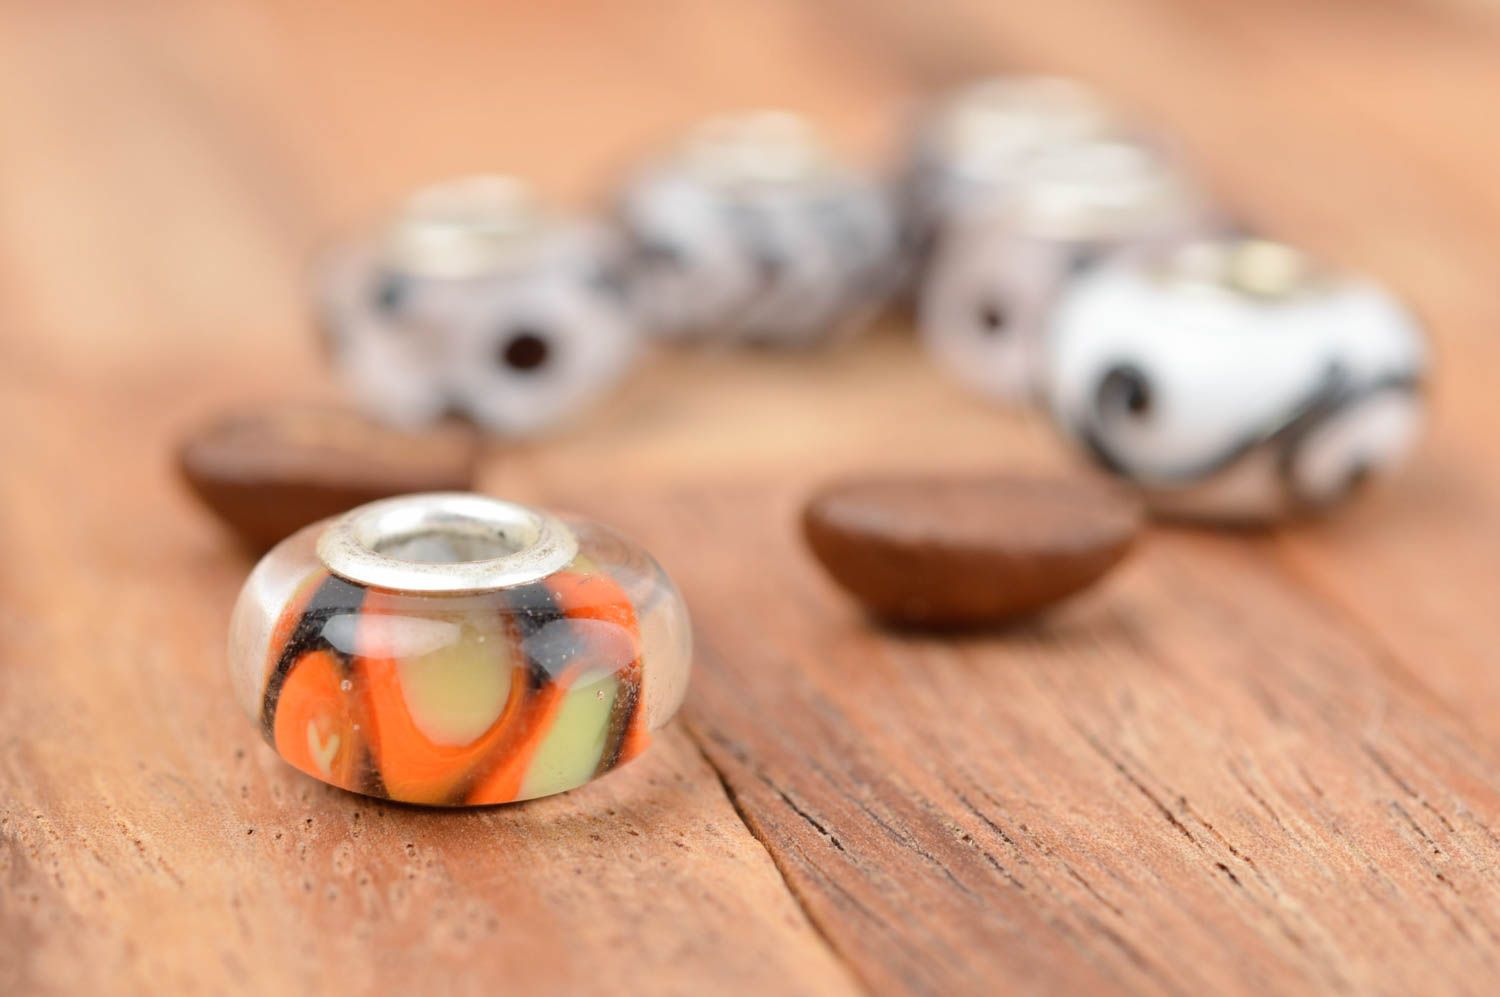 Beautiful handmade glass bead jewelry making supplies art and craft ideas photo 1